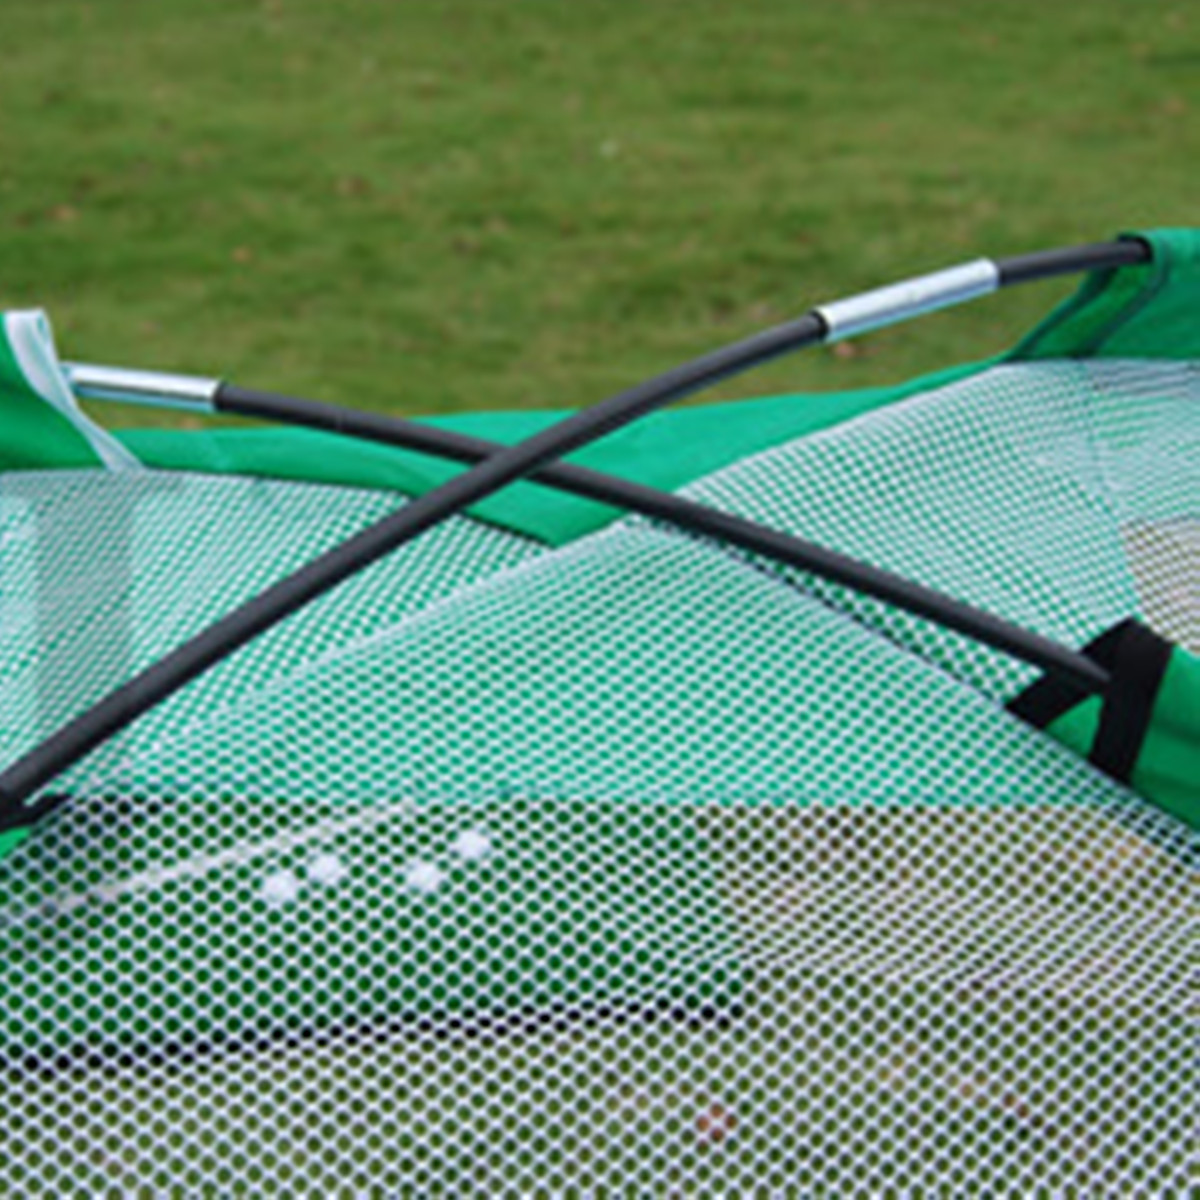 2m-Golf-Training-Net-Folding-Oxford-Cloth-Practice-Net-With-Storage-Bag-1662502-3